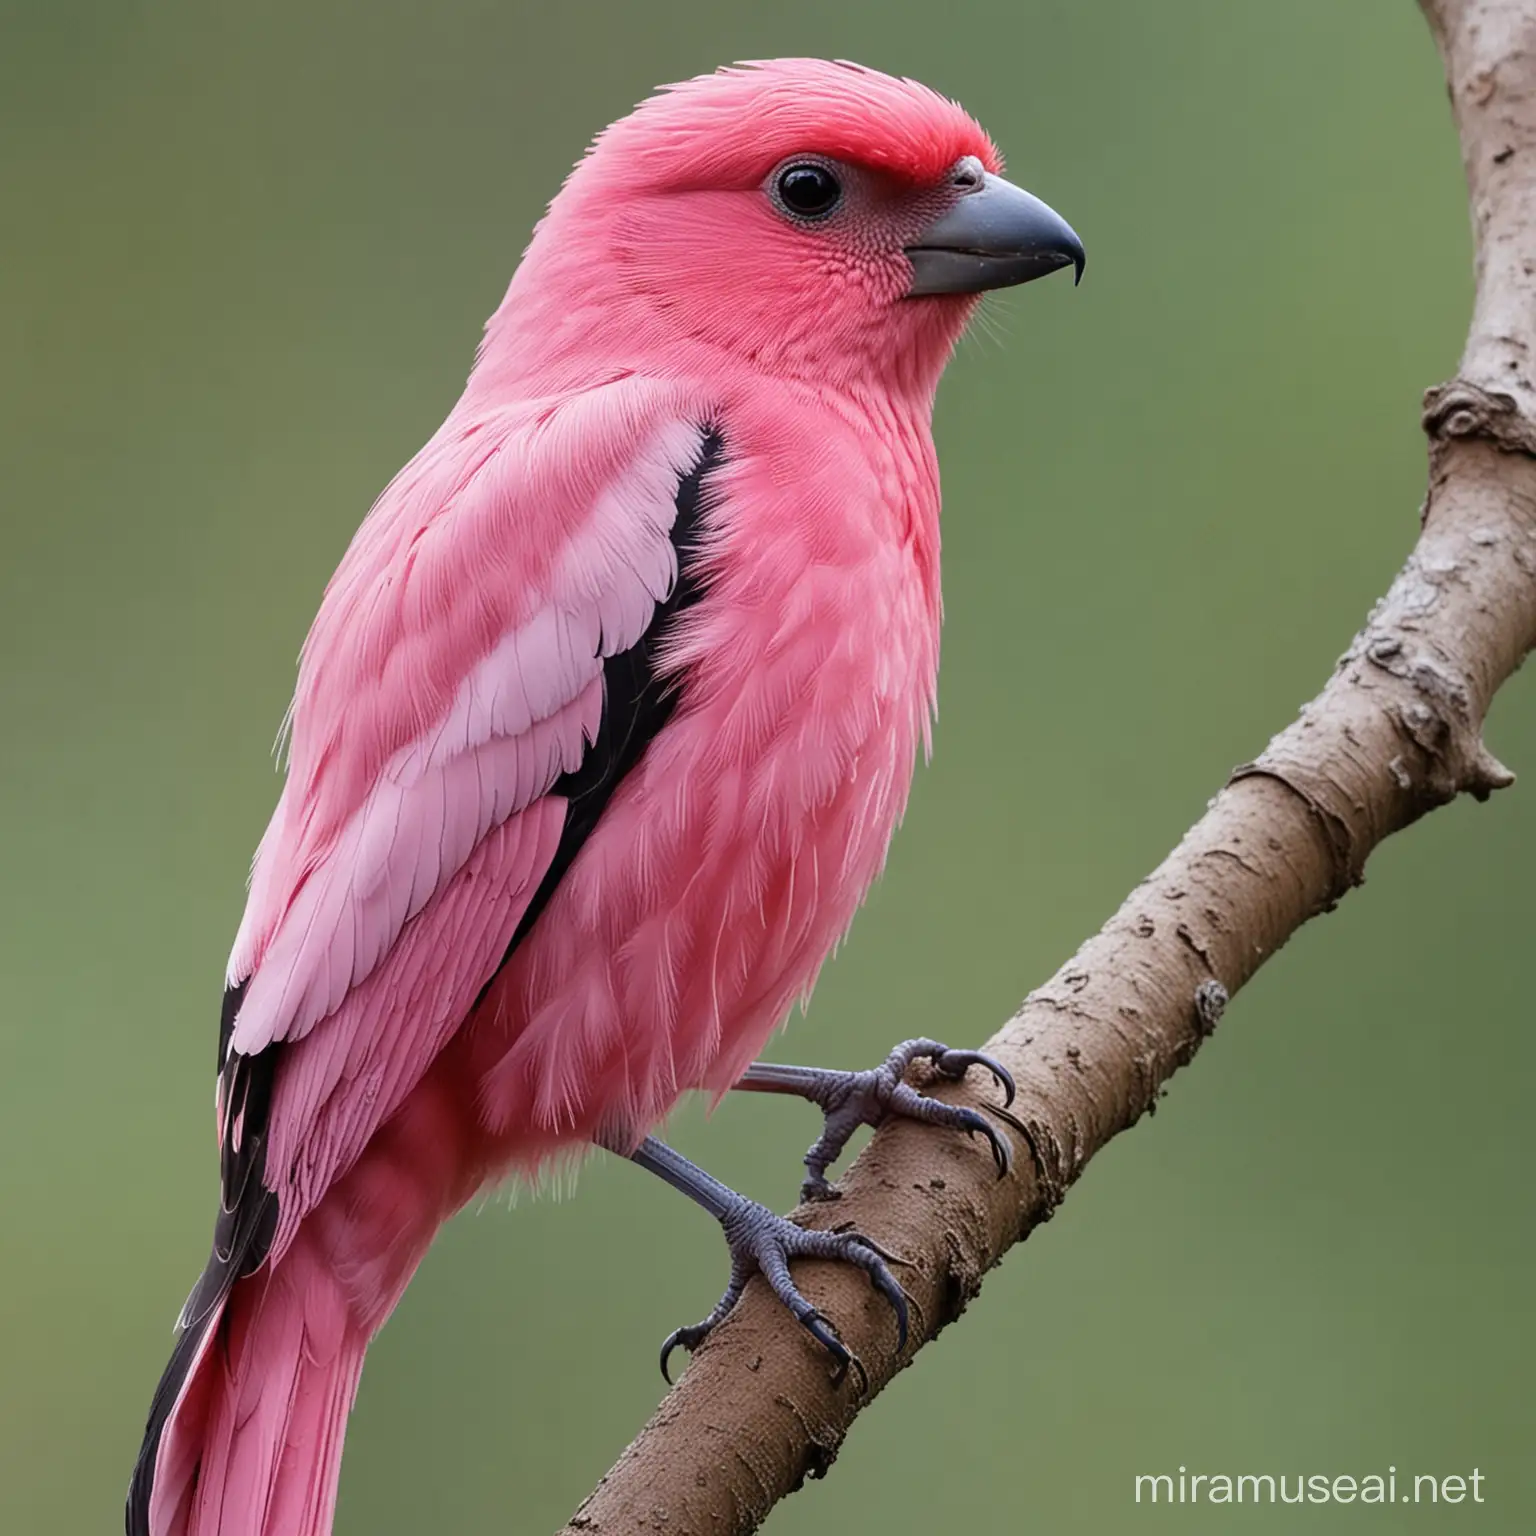 Stunning PinkFeathered Bird in a Tropical Garden